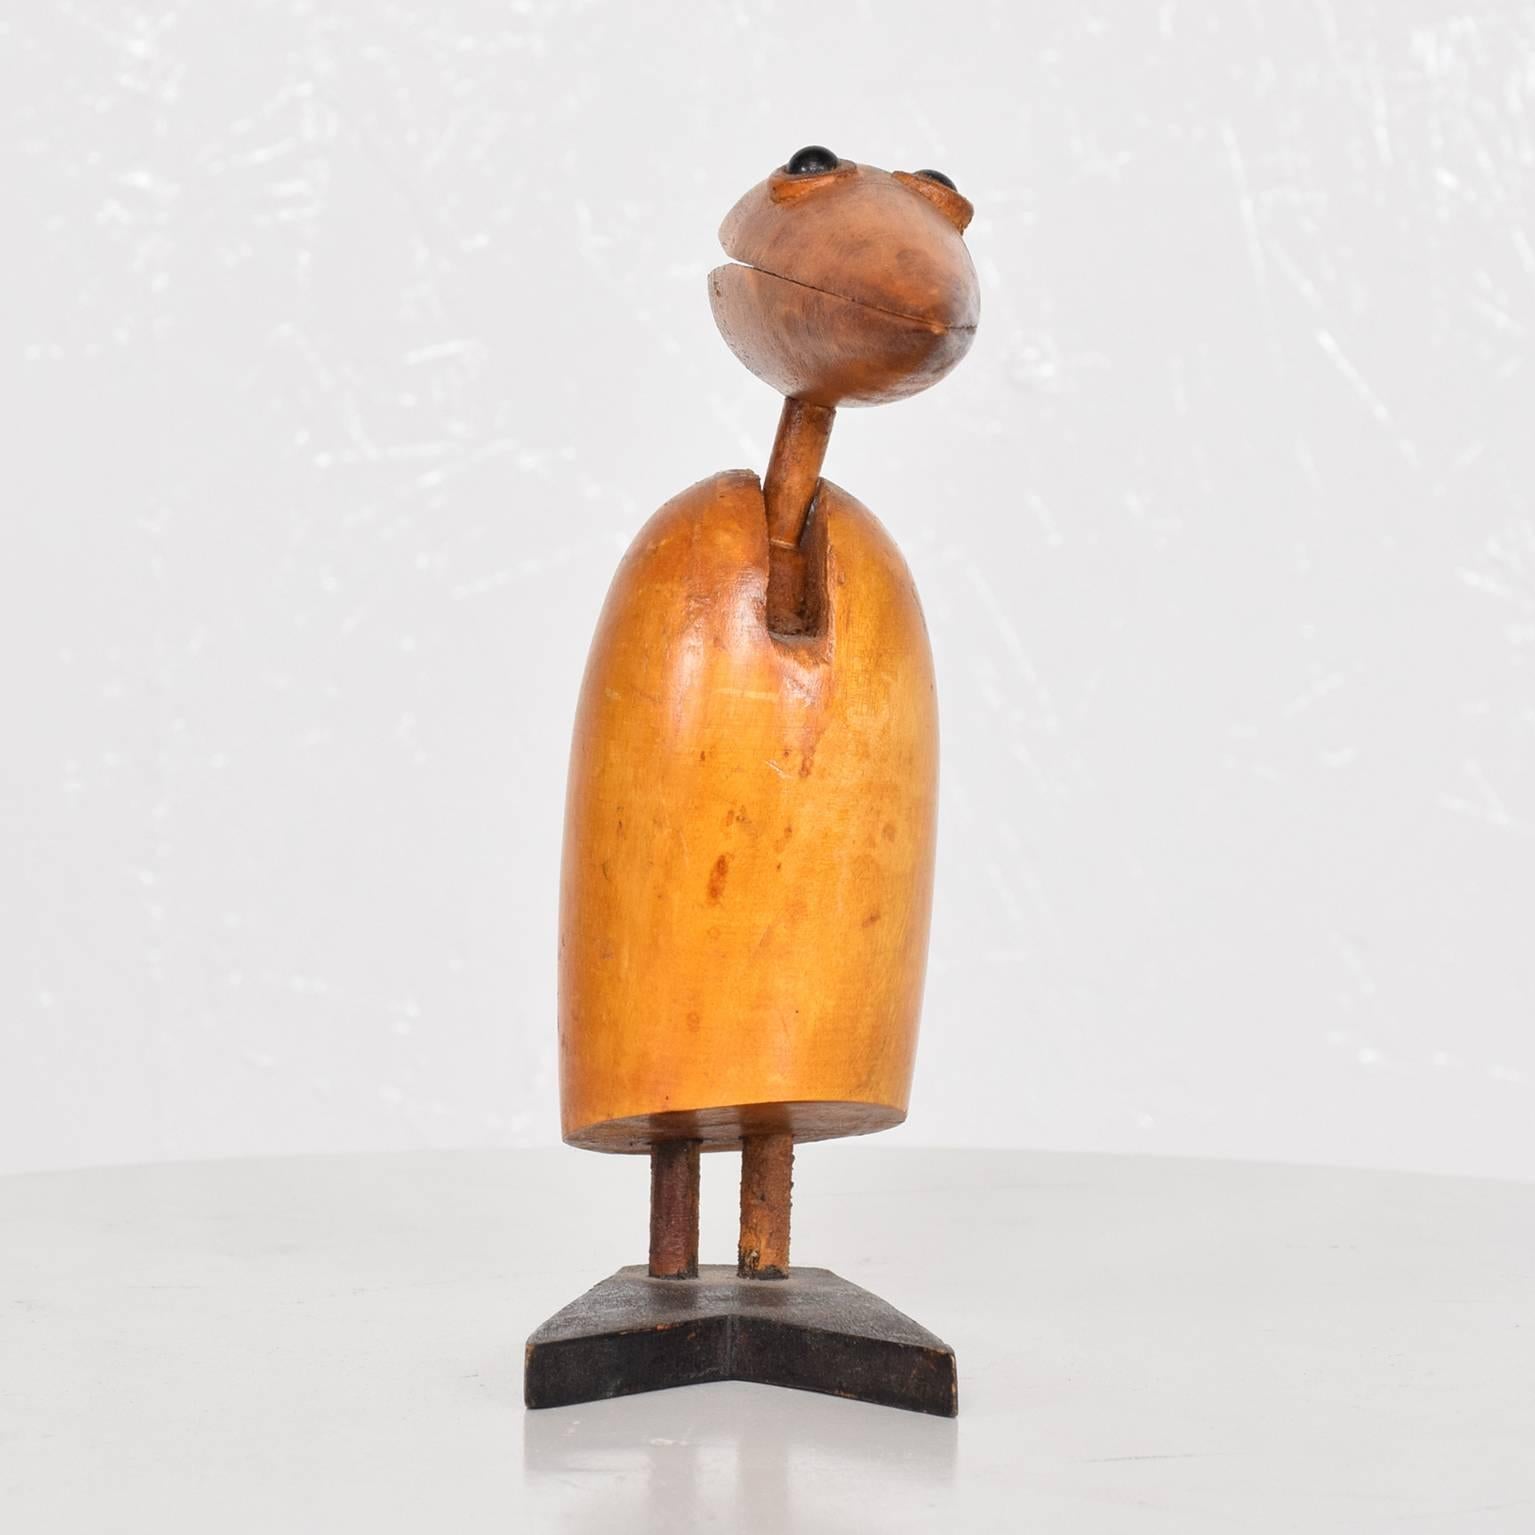 For your consideration a wooden bird figurine,
circa 1950s.
Original vintage unrestored condition.